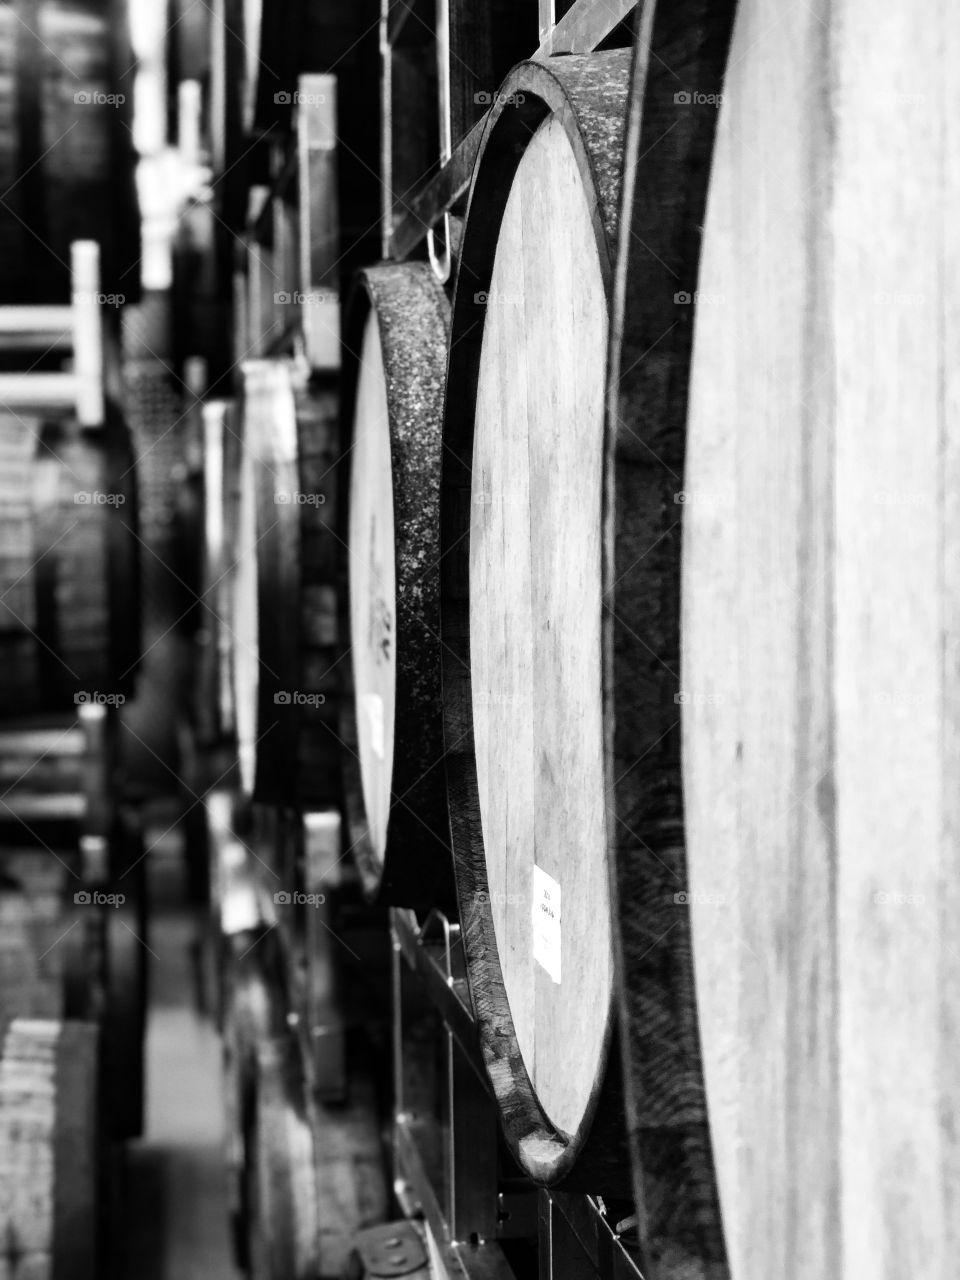 Vineyard wine barrels